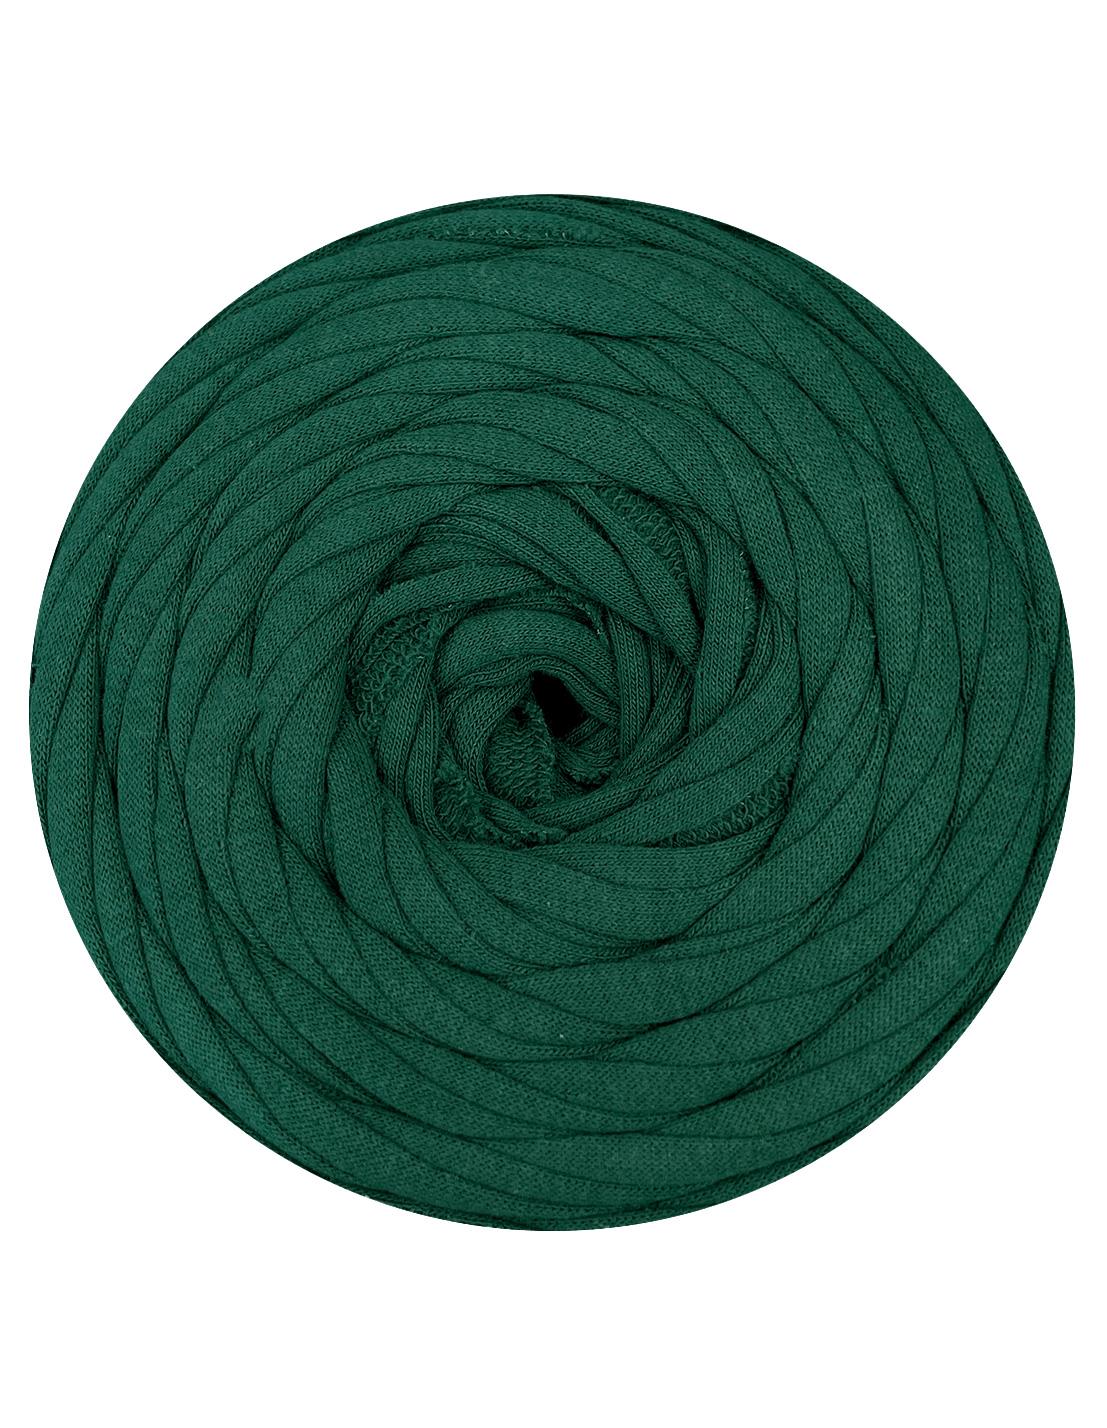 Castleton green t-shirt yarn (100-120m)